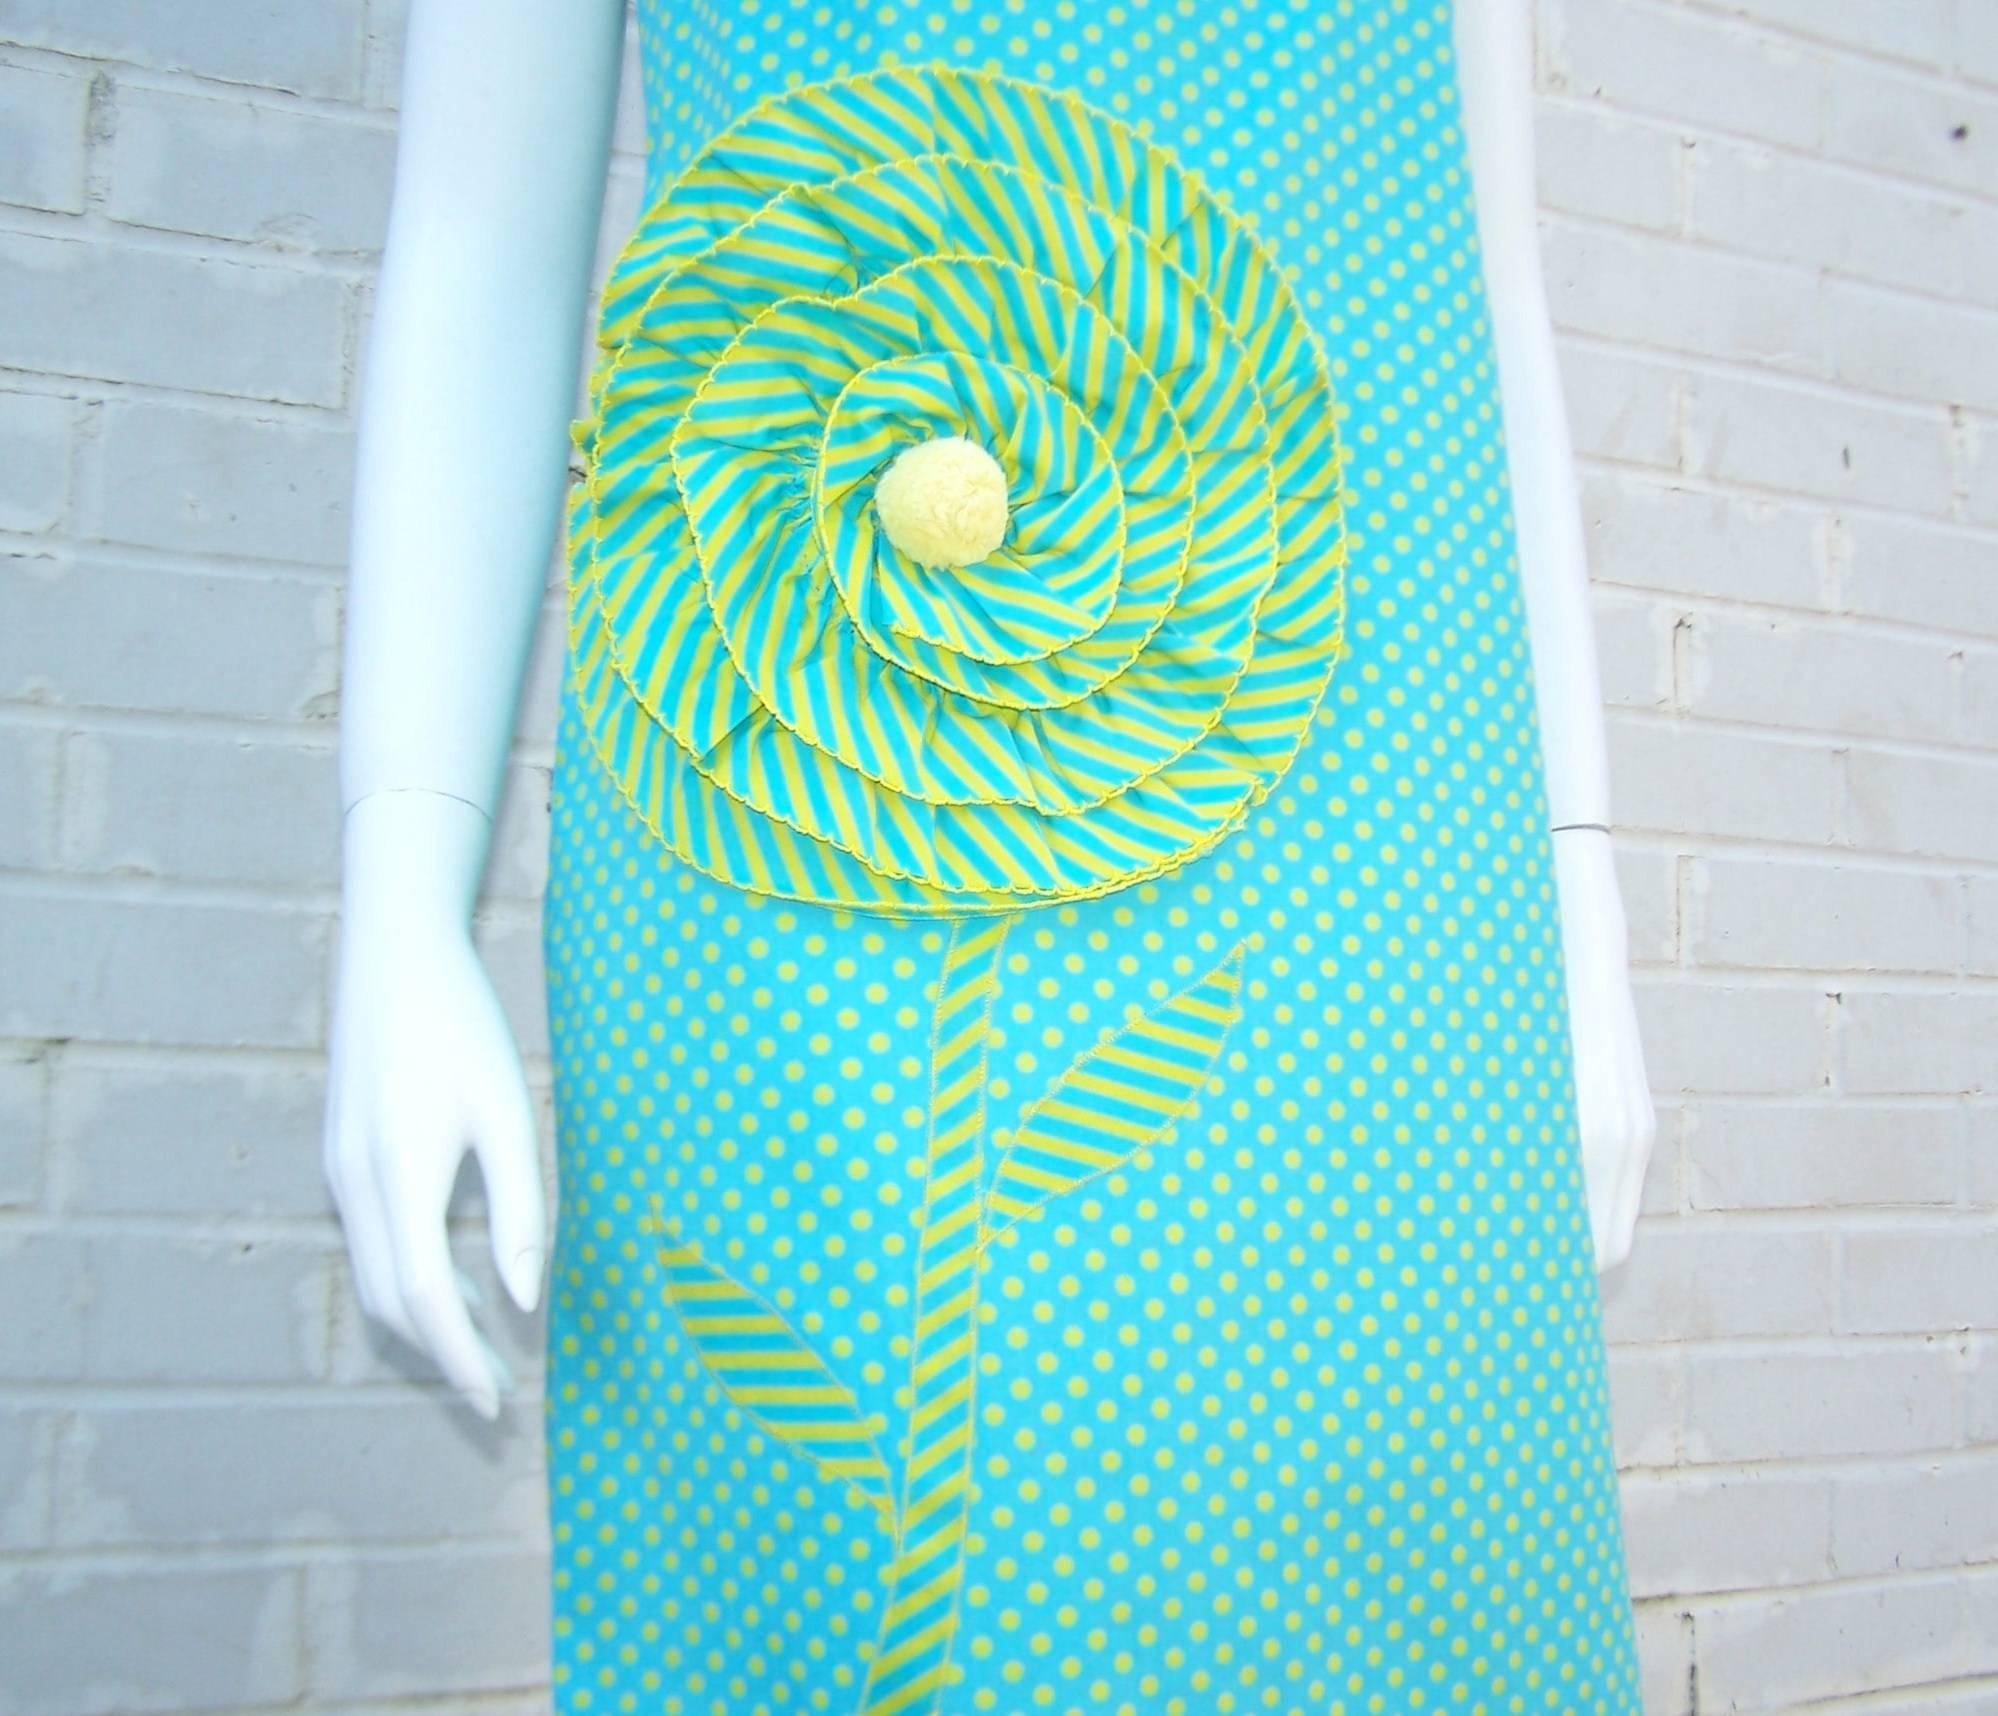 c.1980 Mod Pop Art Cotton Polka Dot Shift Dress 1